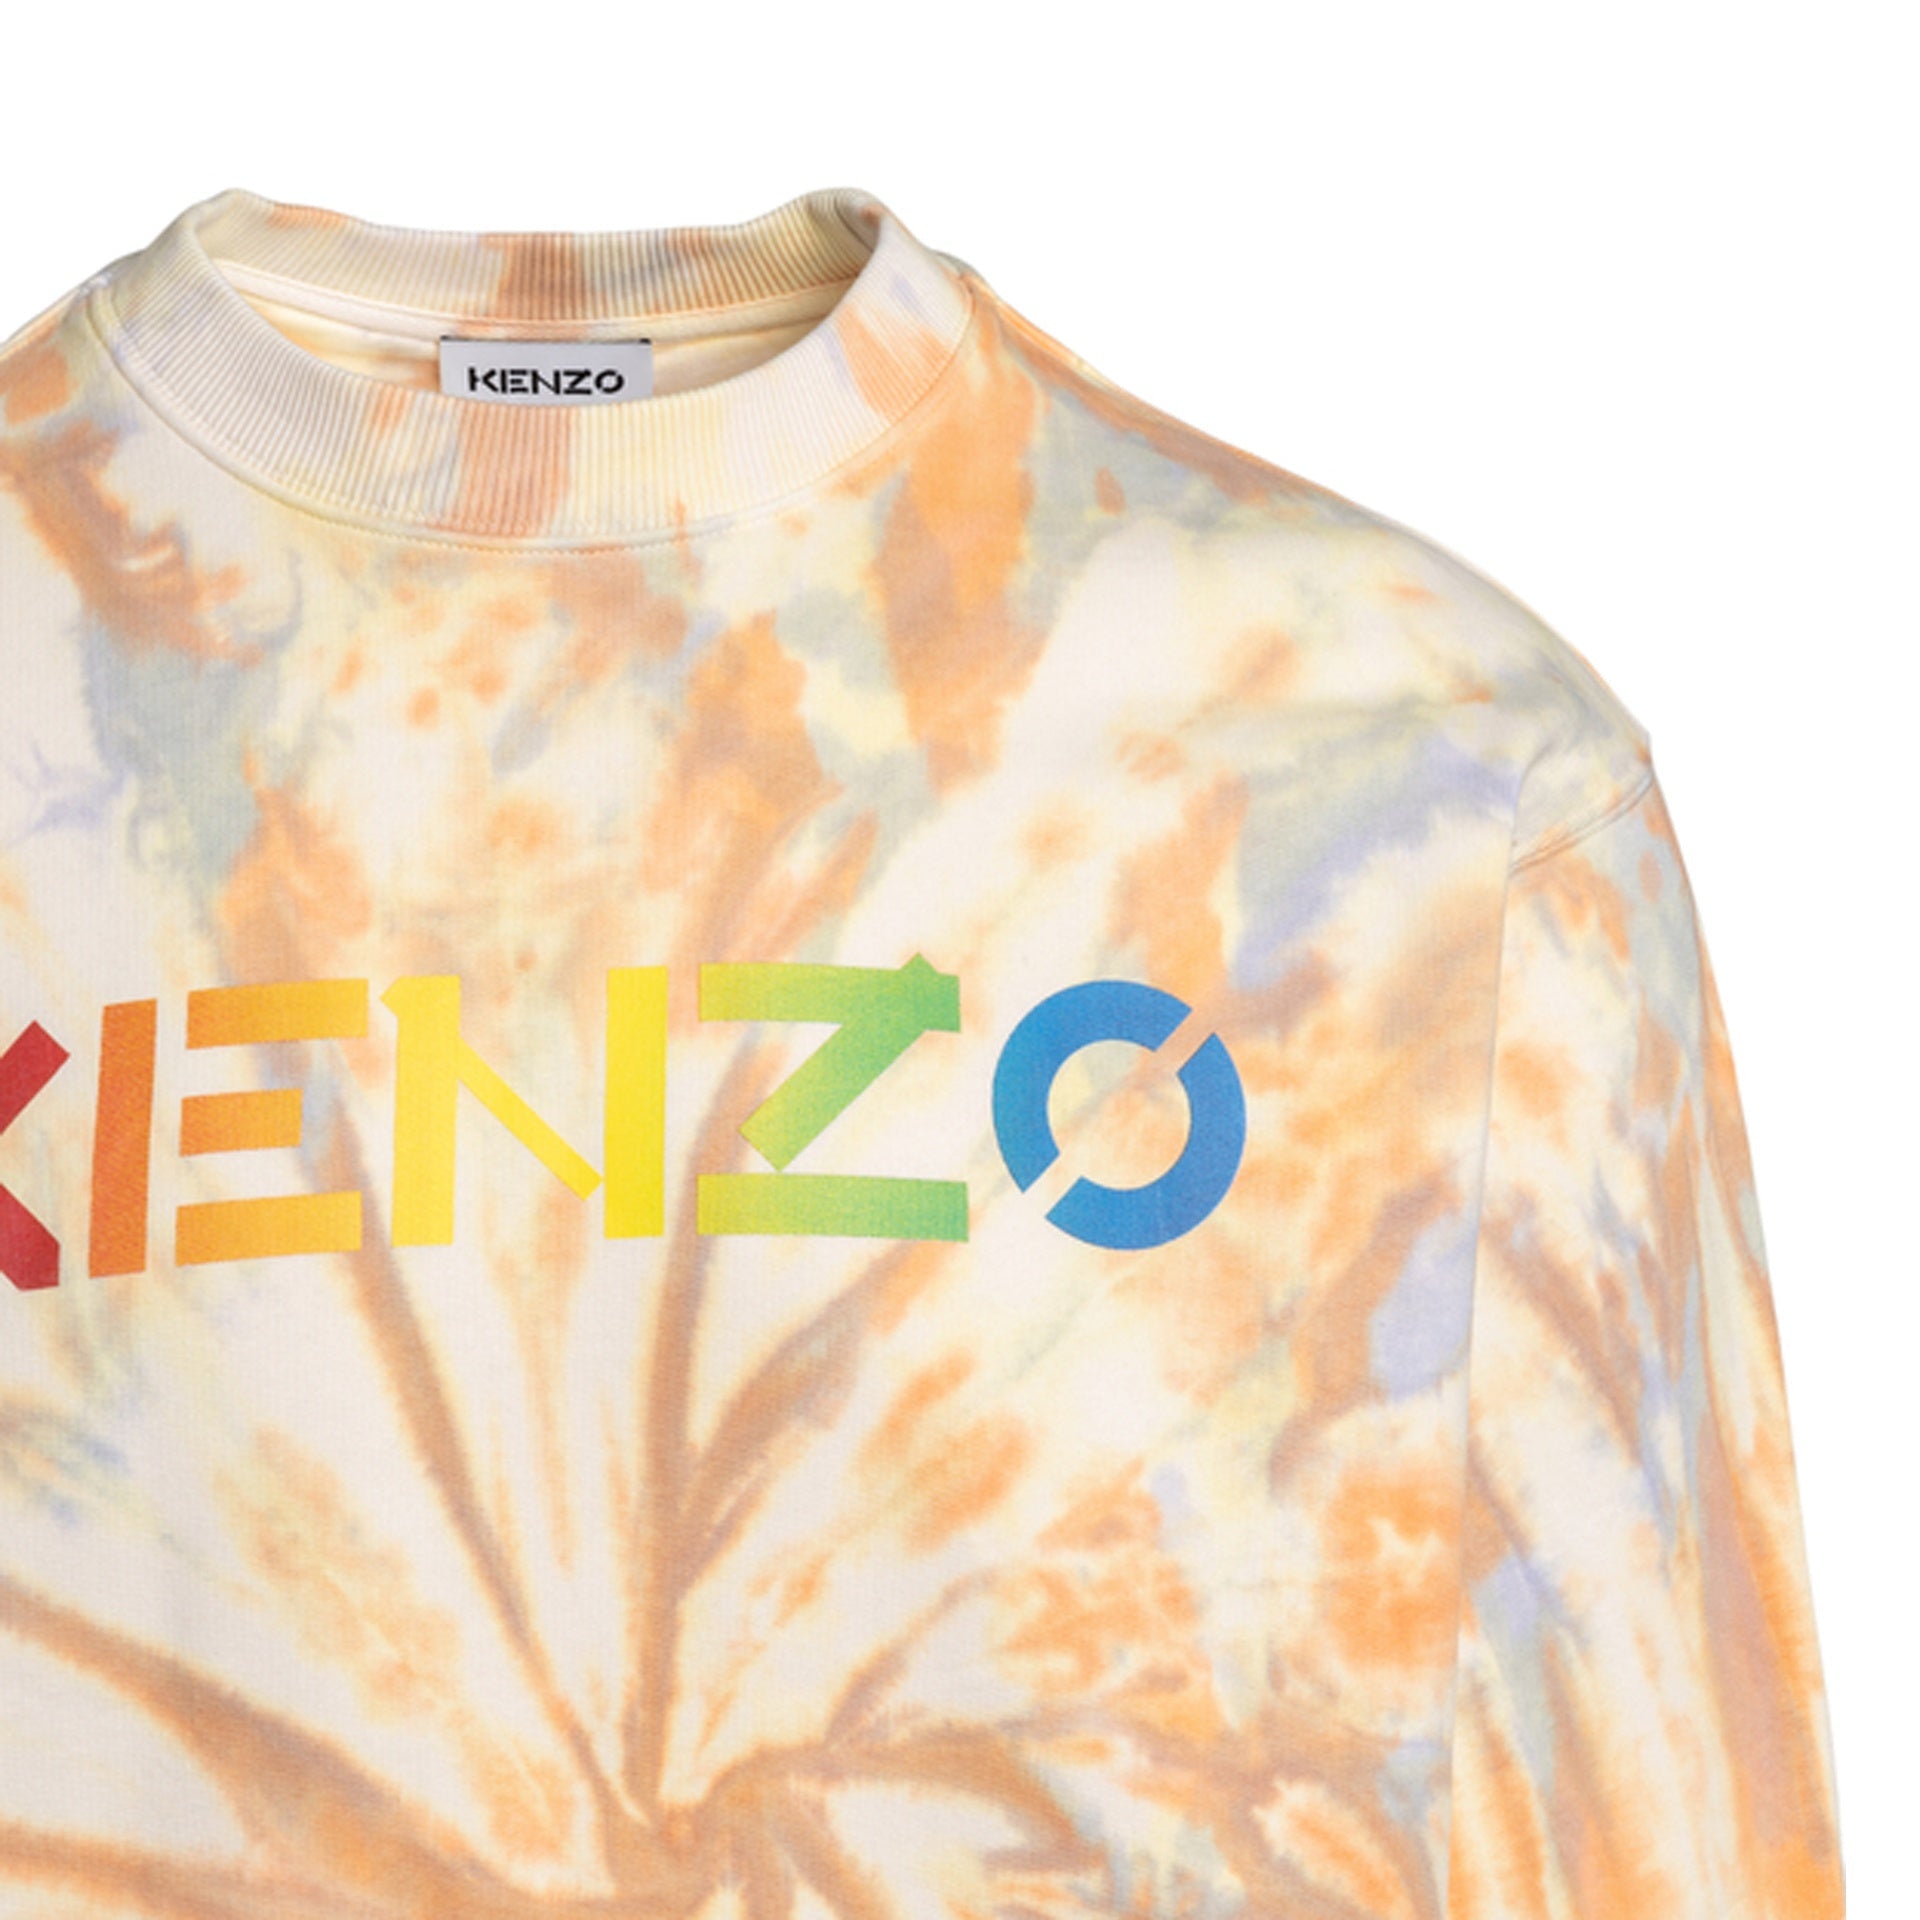 KENZO-OUTLET-SALE-Kenzo-Cotton-Logo-Sweatshirt-Shirts-ARCHIVE-COLLECTION-3.jpg